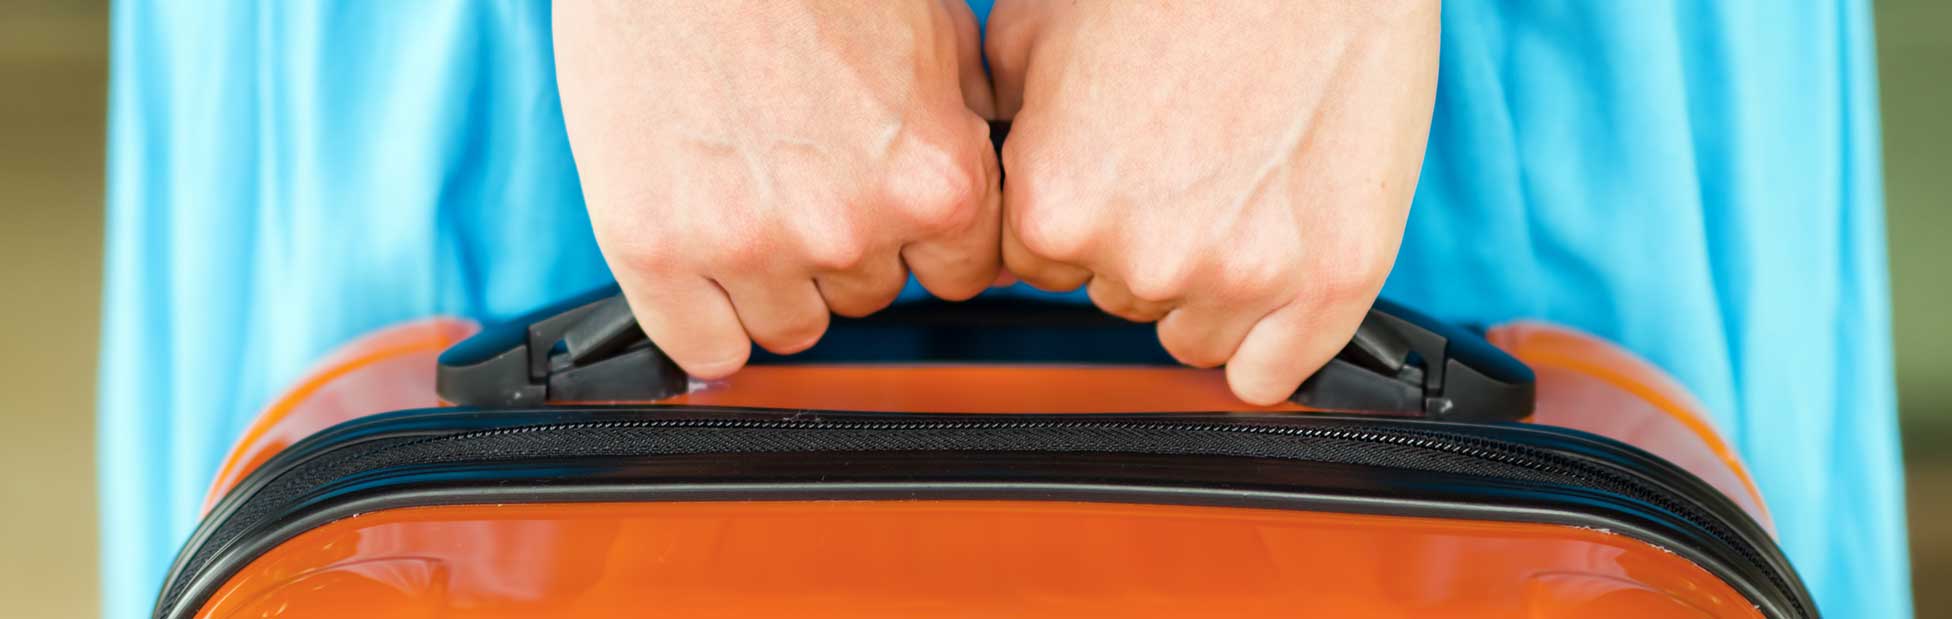 Hands holding bright orange suitcase